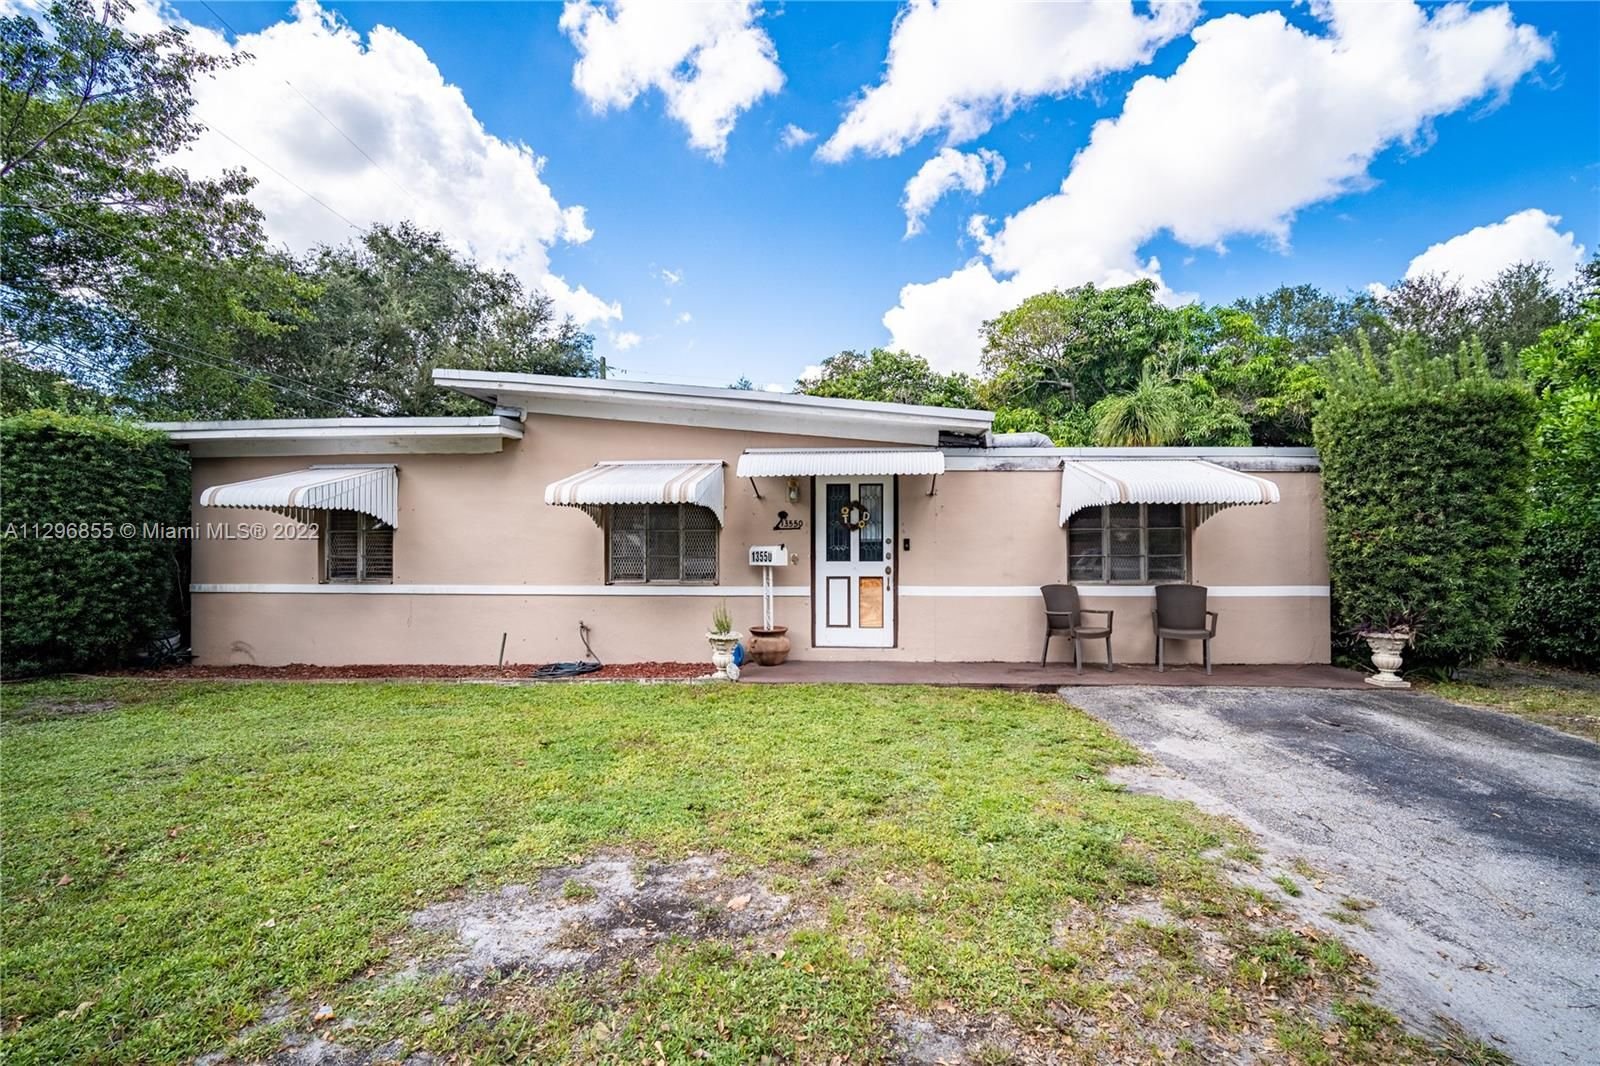 Real estate property located at 13550 5th Ave, Miami-Dade County, North Miami, FL